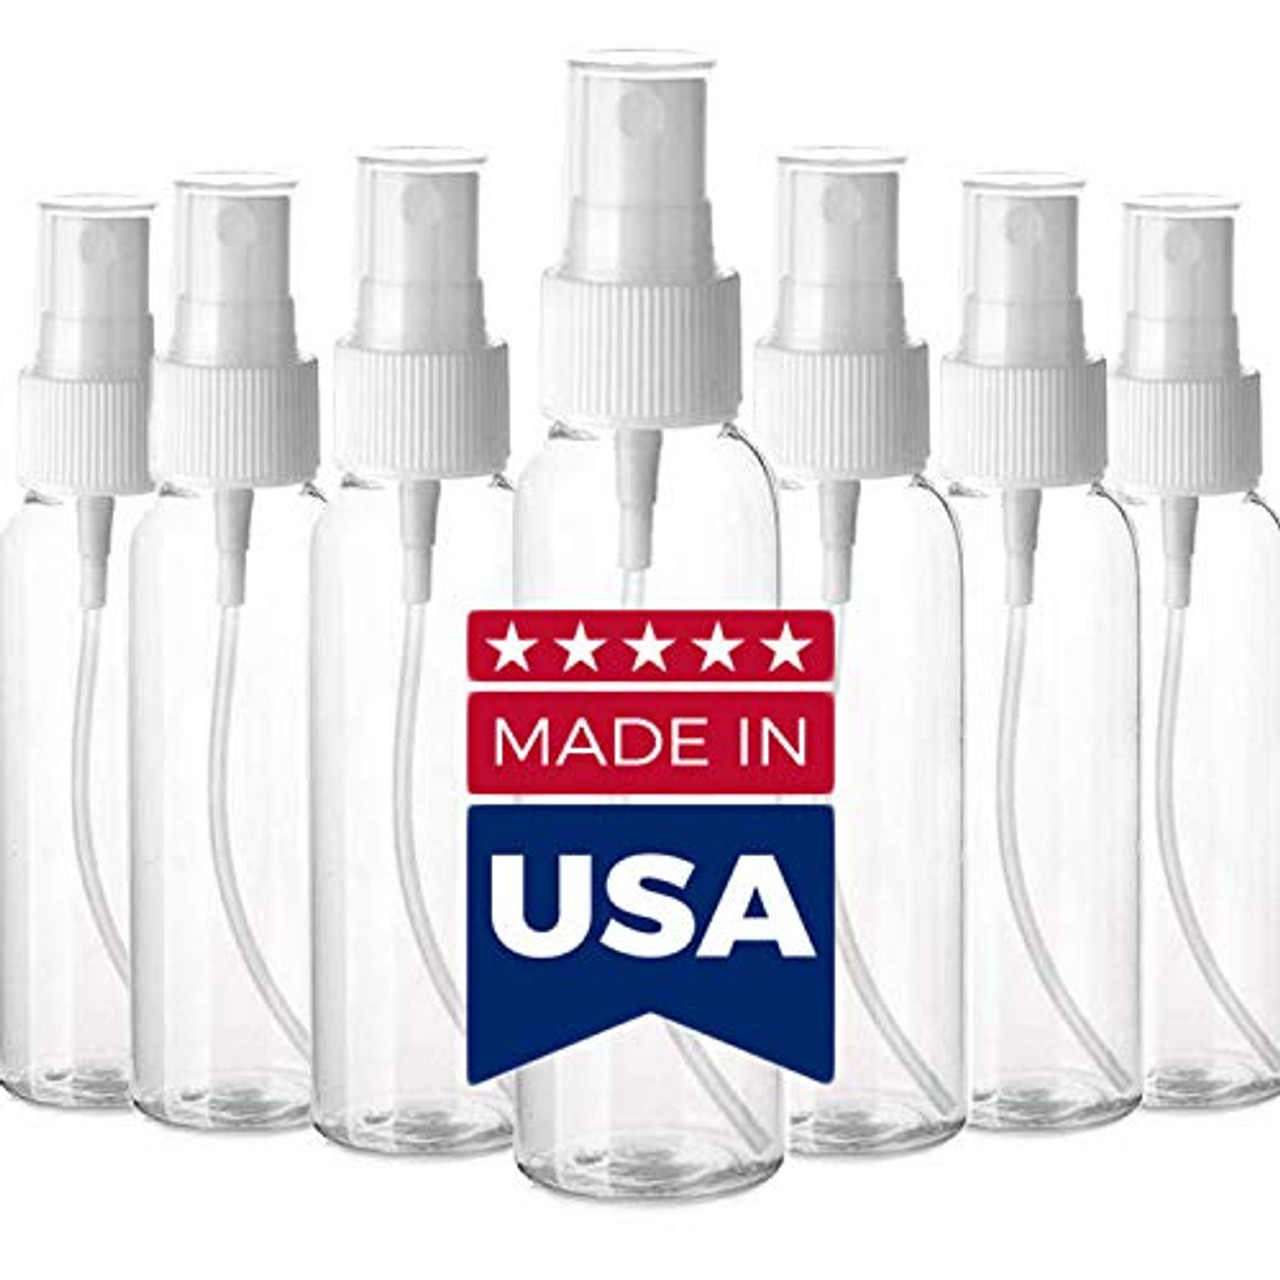 Plastic Spray Bottle – 250ml Atomizer Bottle